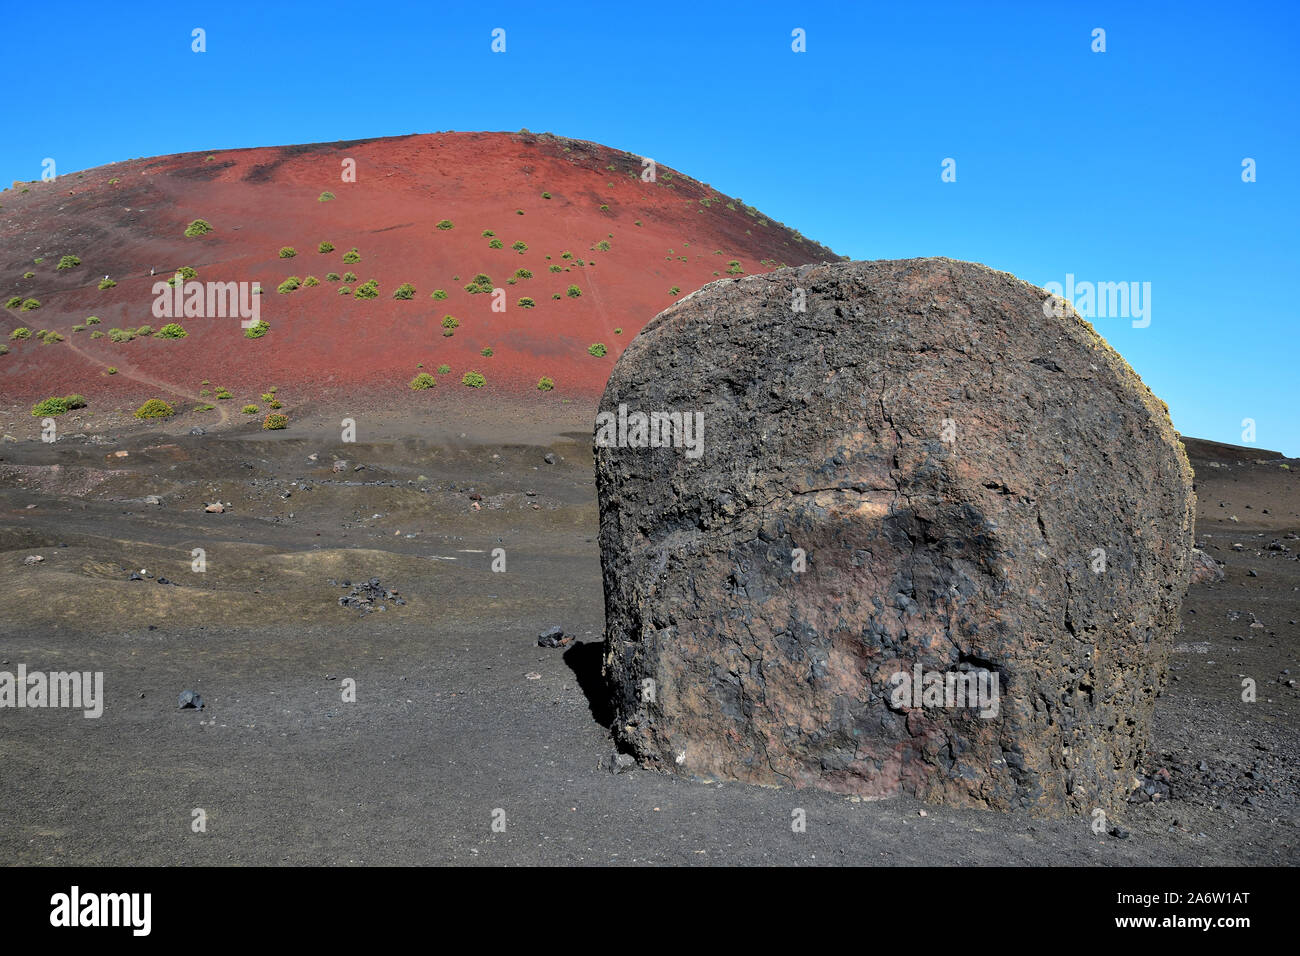 The big lava bomb near the red volcano Montana Colorada in Lanzarote, Spain. Stock Photo